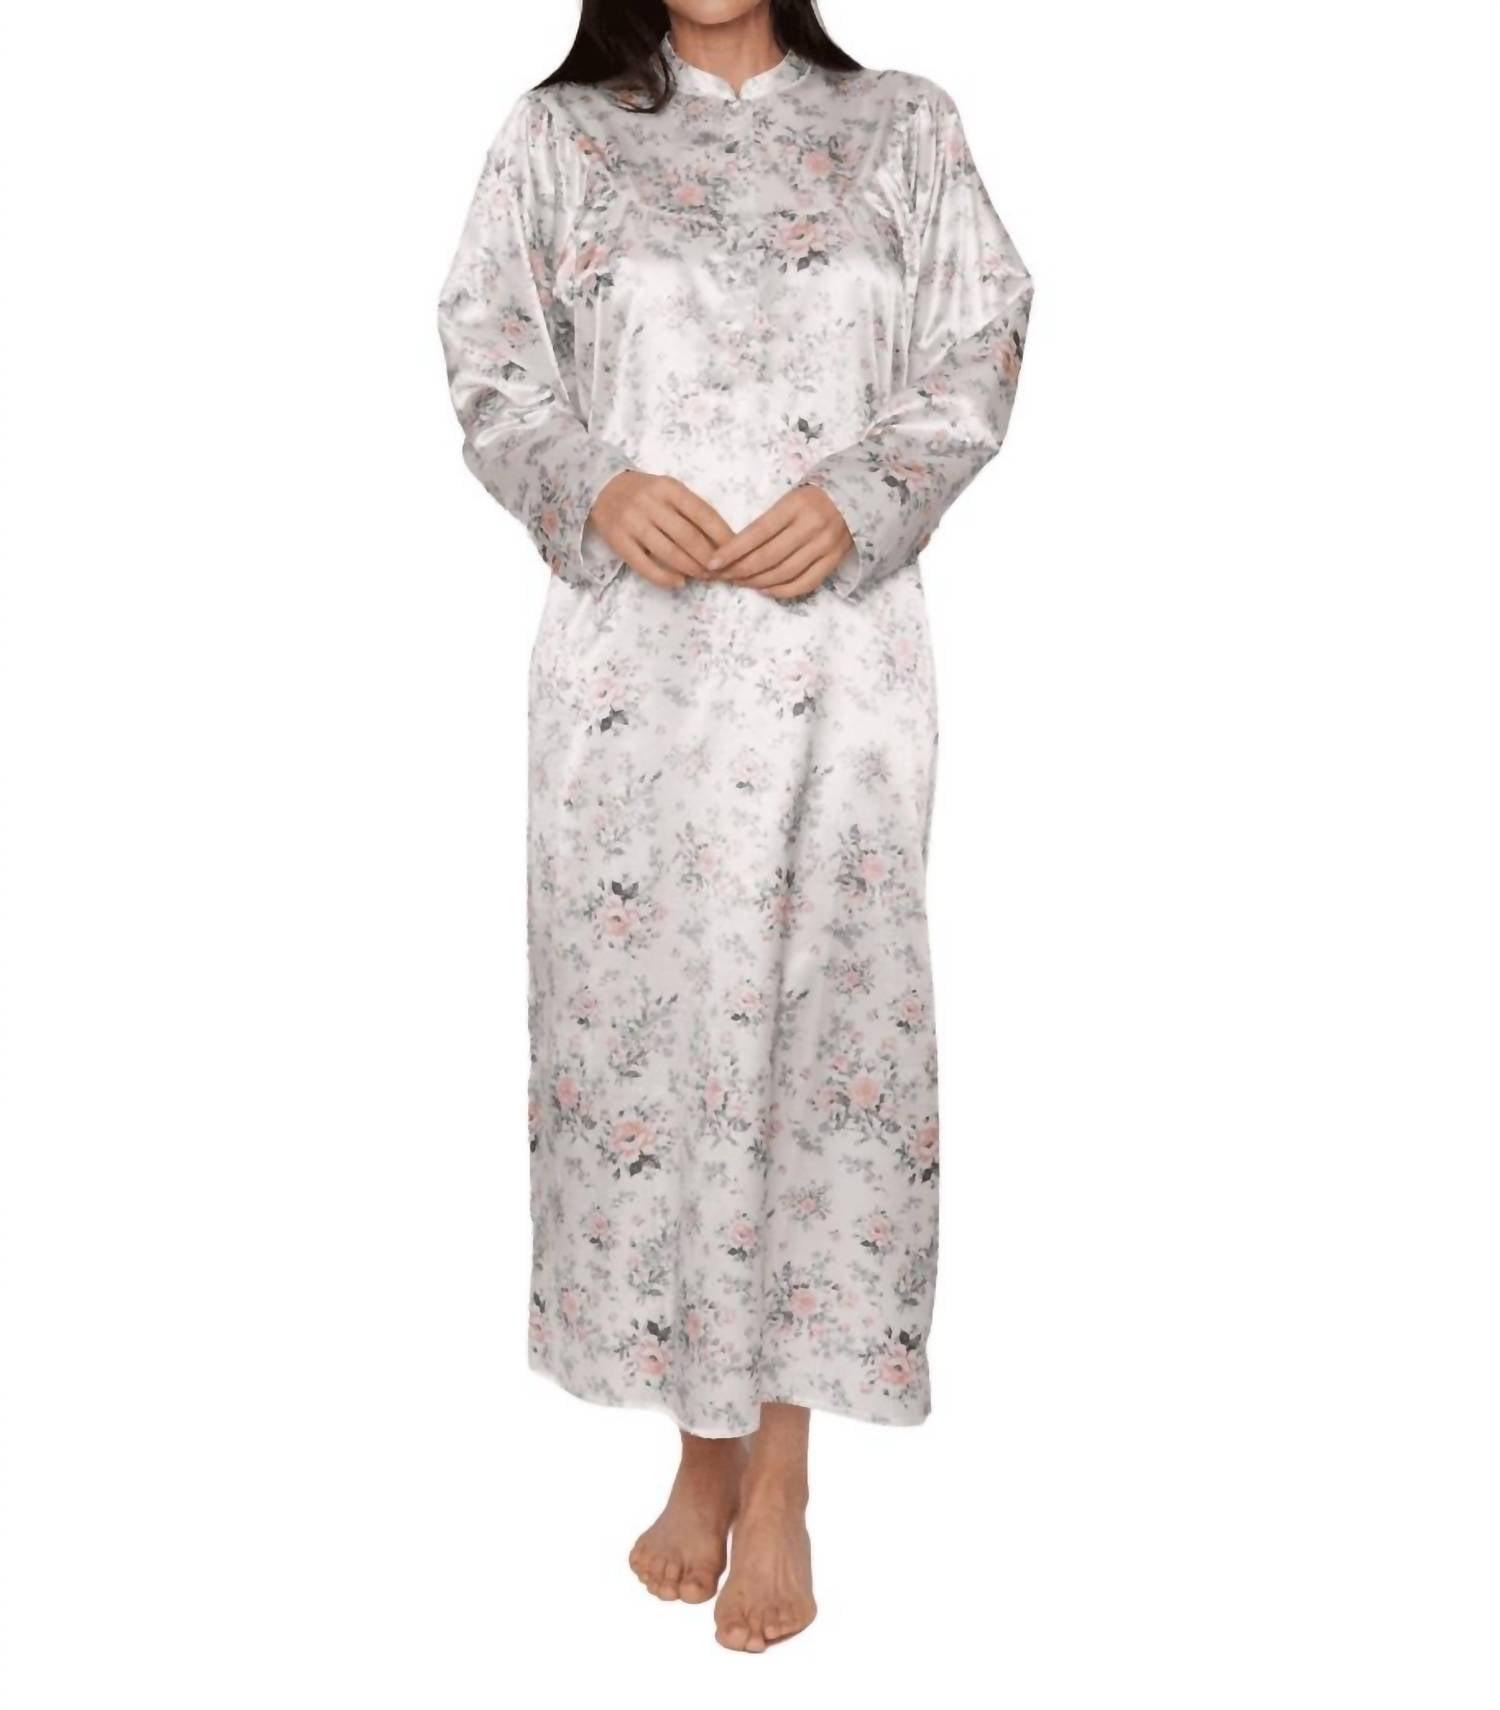 Kayanna Brushed Back Satin Nightgown - Walmart.com